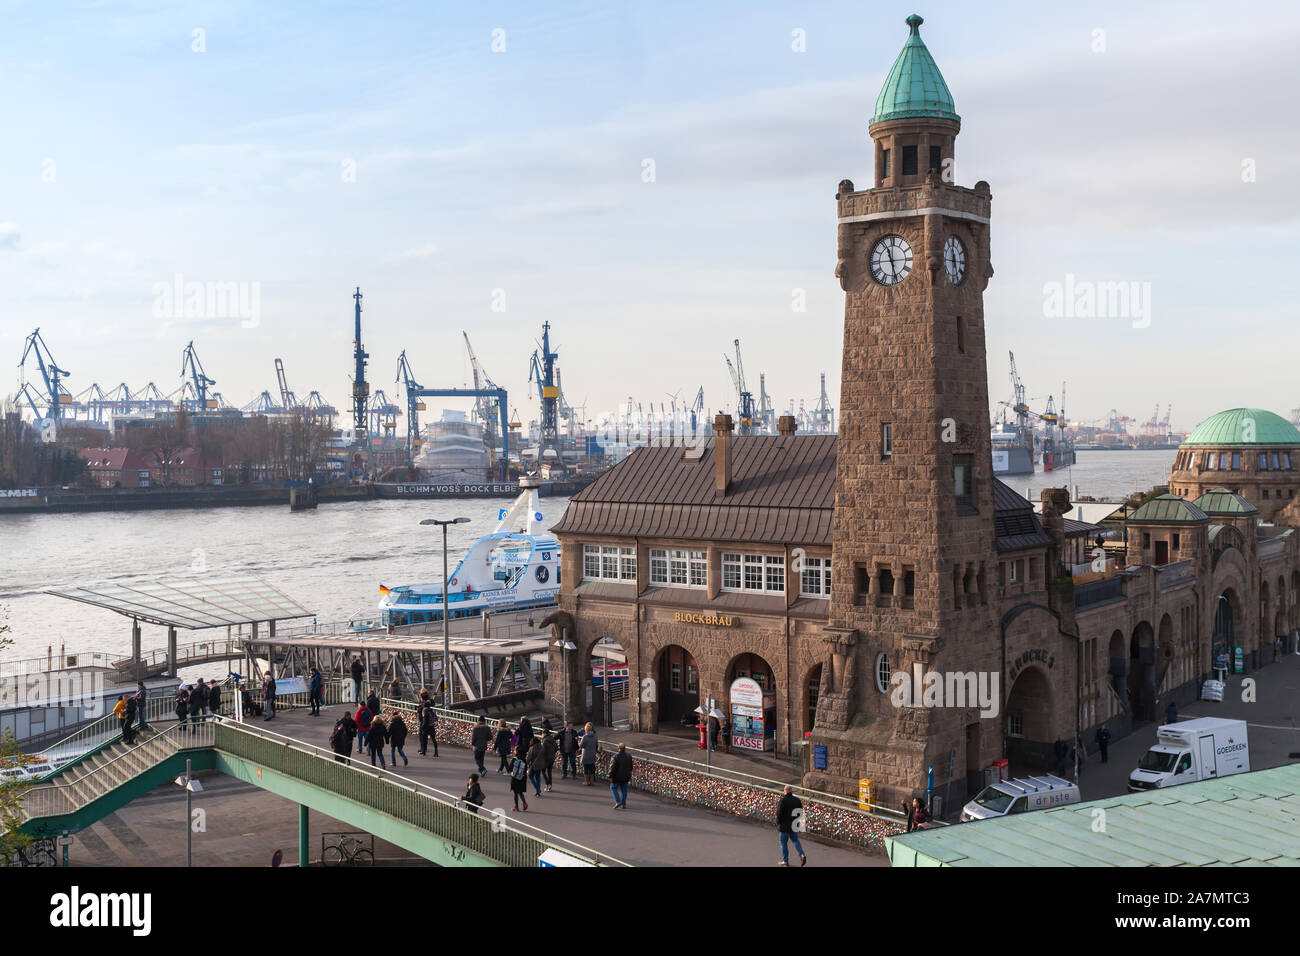 Hamburg, Germany - November 30, 2018: Port of Hamburg. Clocktower at Landungsbruecken at daytime, ordinary people and cars are on the street Stock Photo